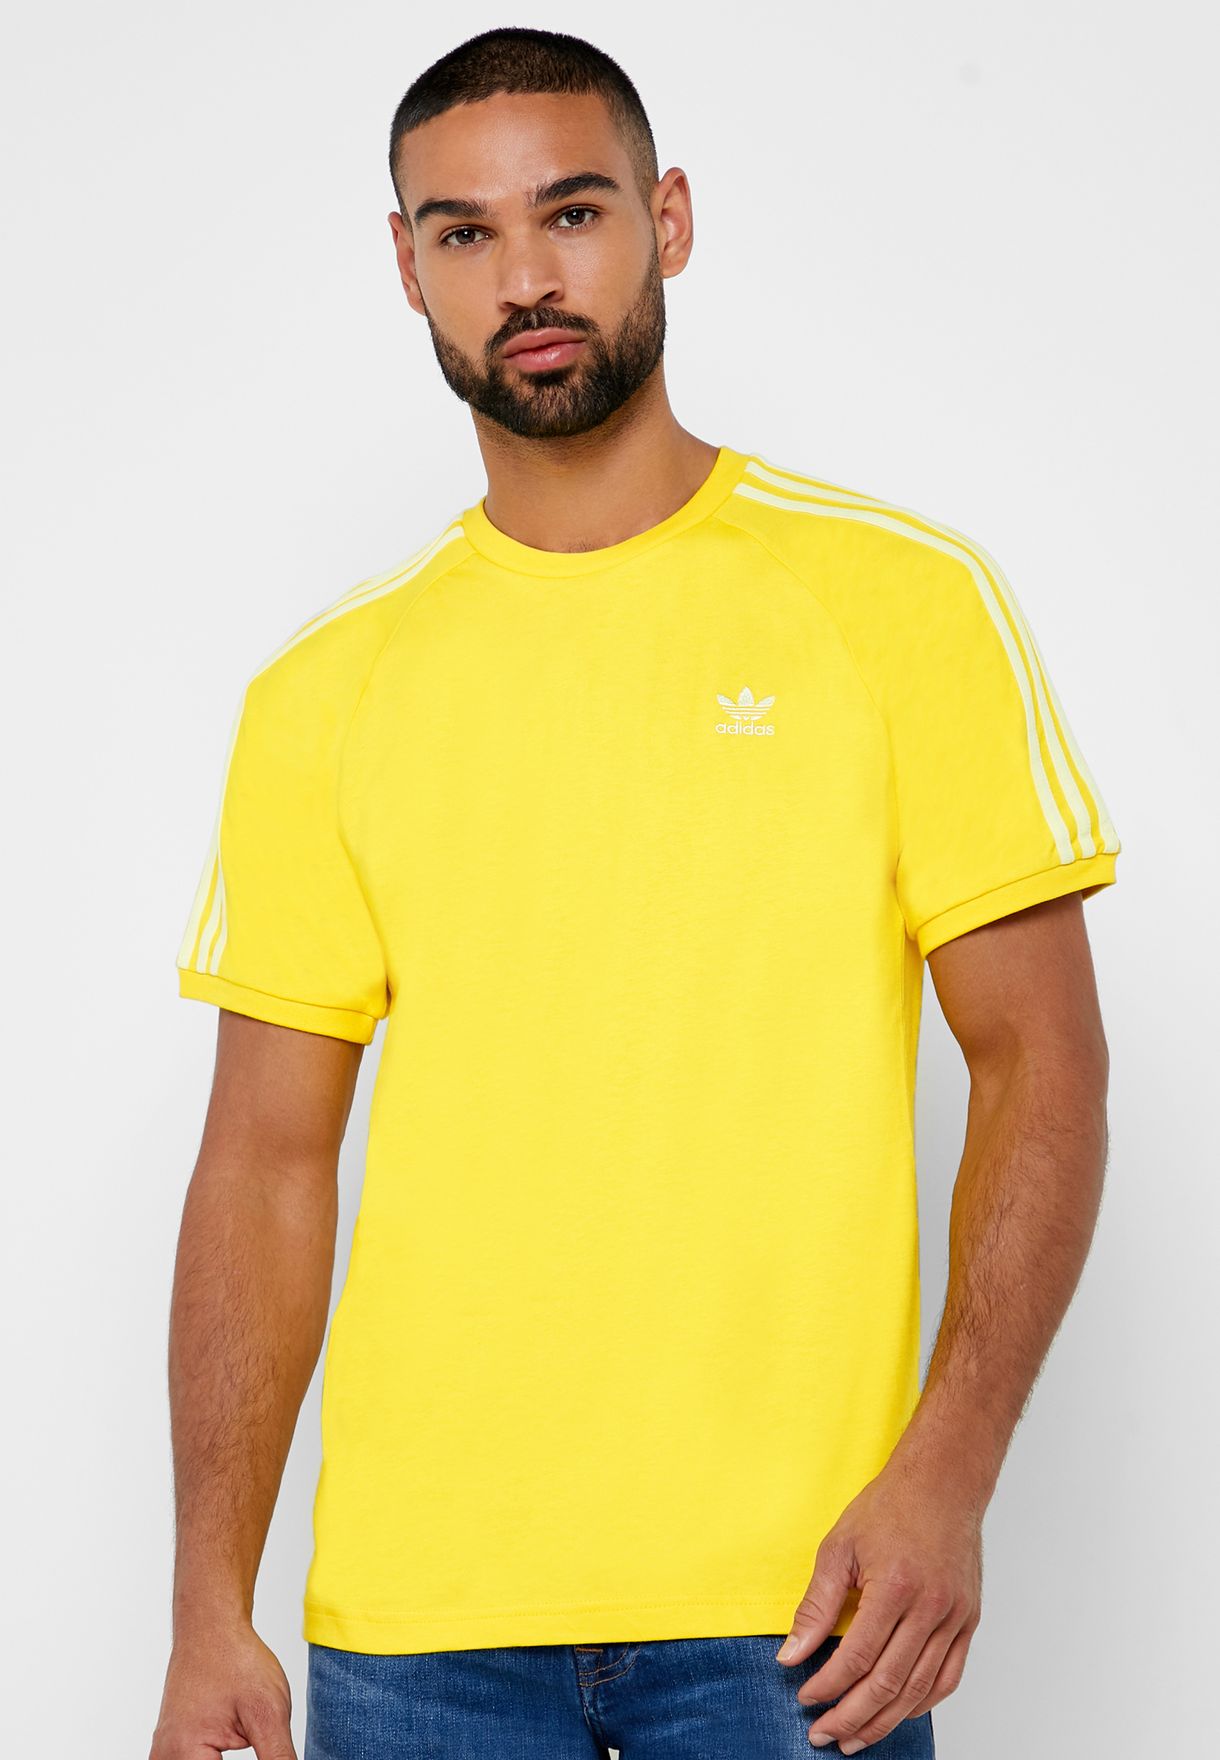 adidas original yellow t shirt